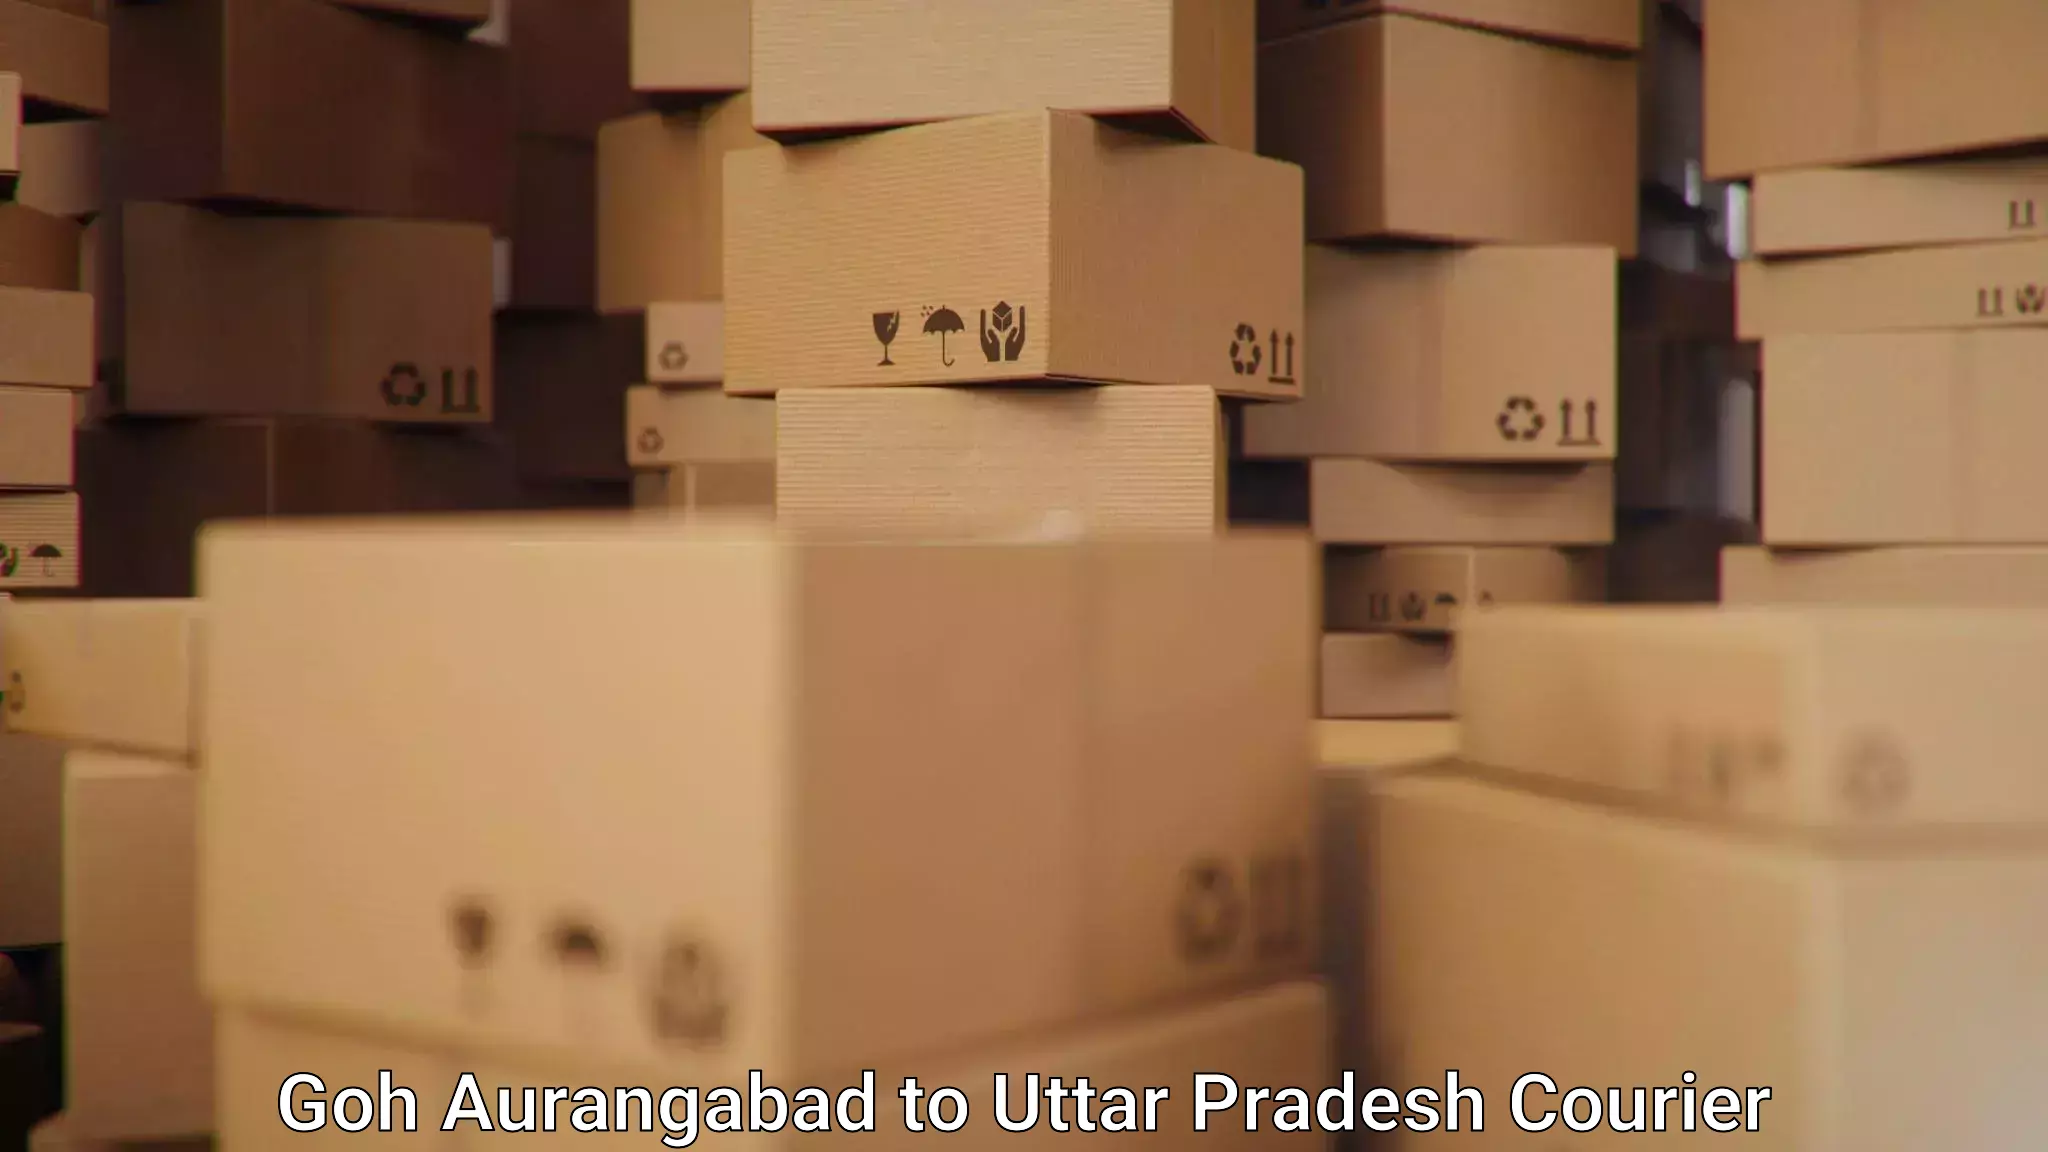 Special handling courier Goh Aurangabad to Gorakhpur